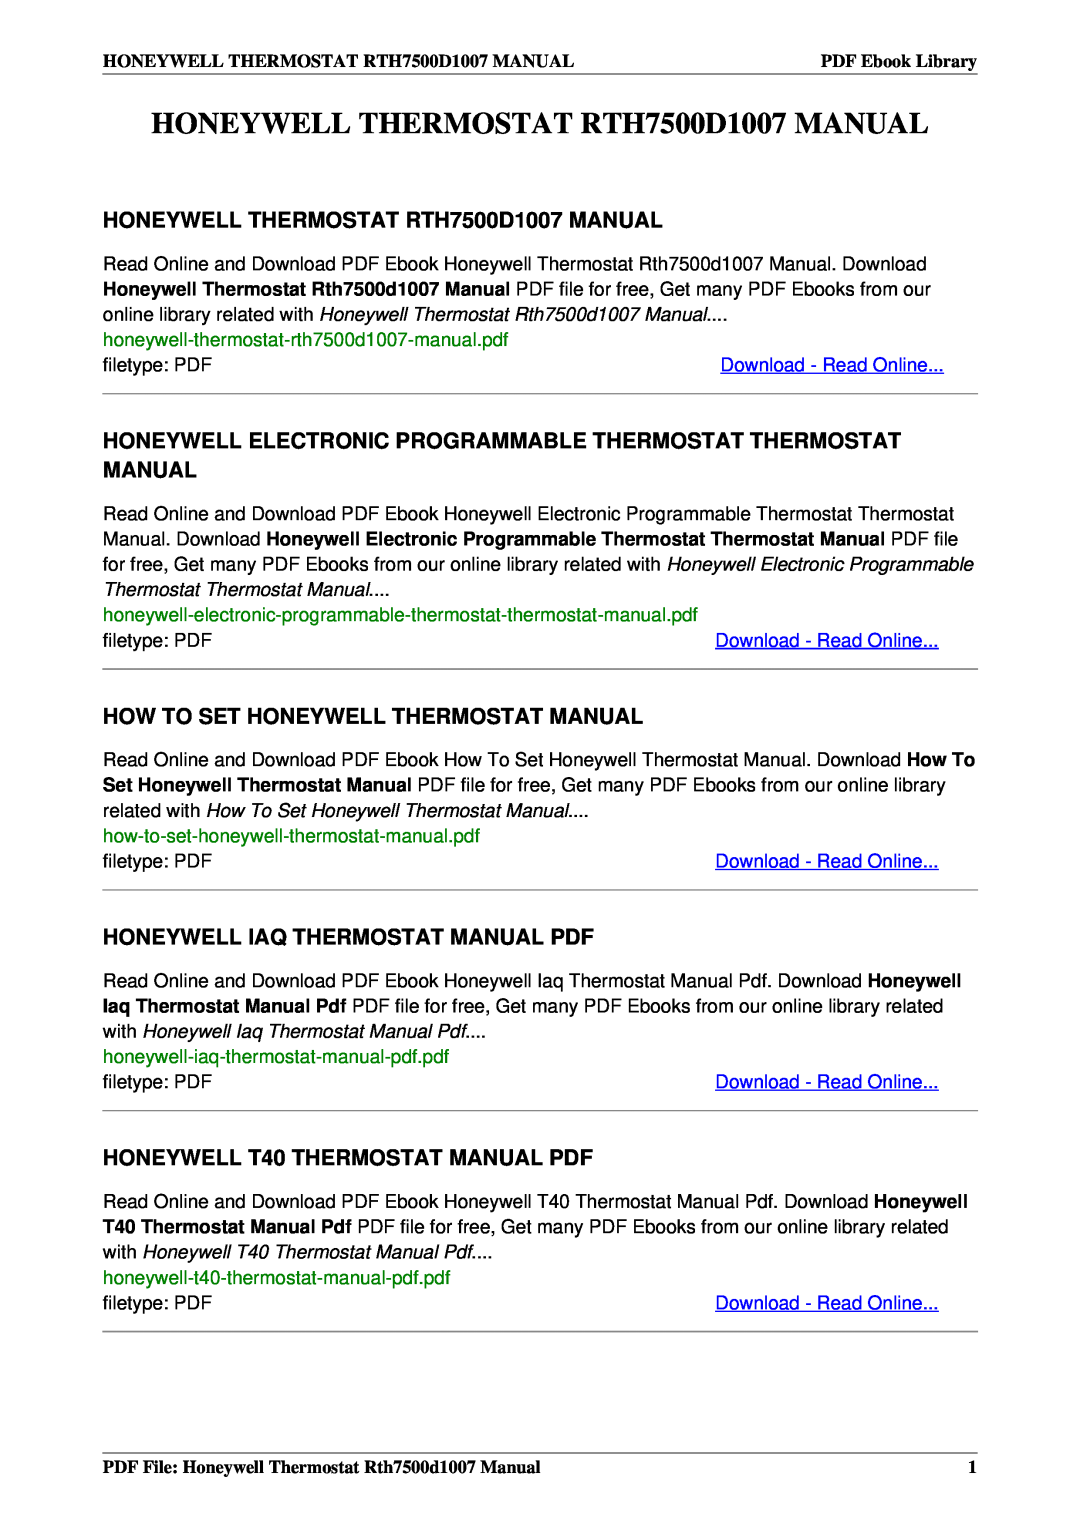 Honeywell manual HONEYWELL THERMOSTAT RTH7500D1007 MANUAL, How To Set Honeywell Thermostat Manual, filetype PDF 